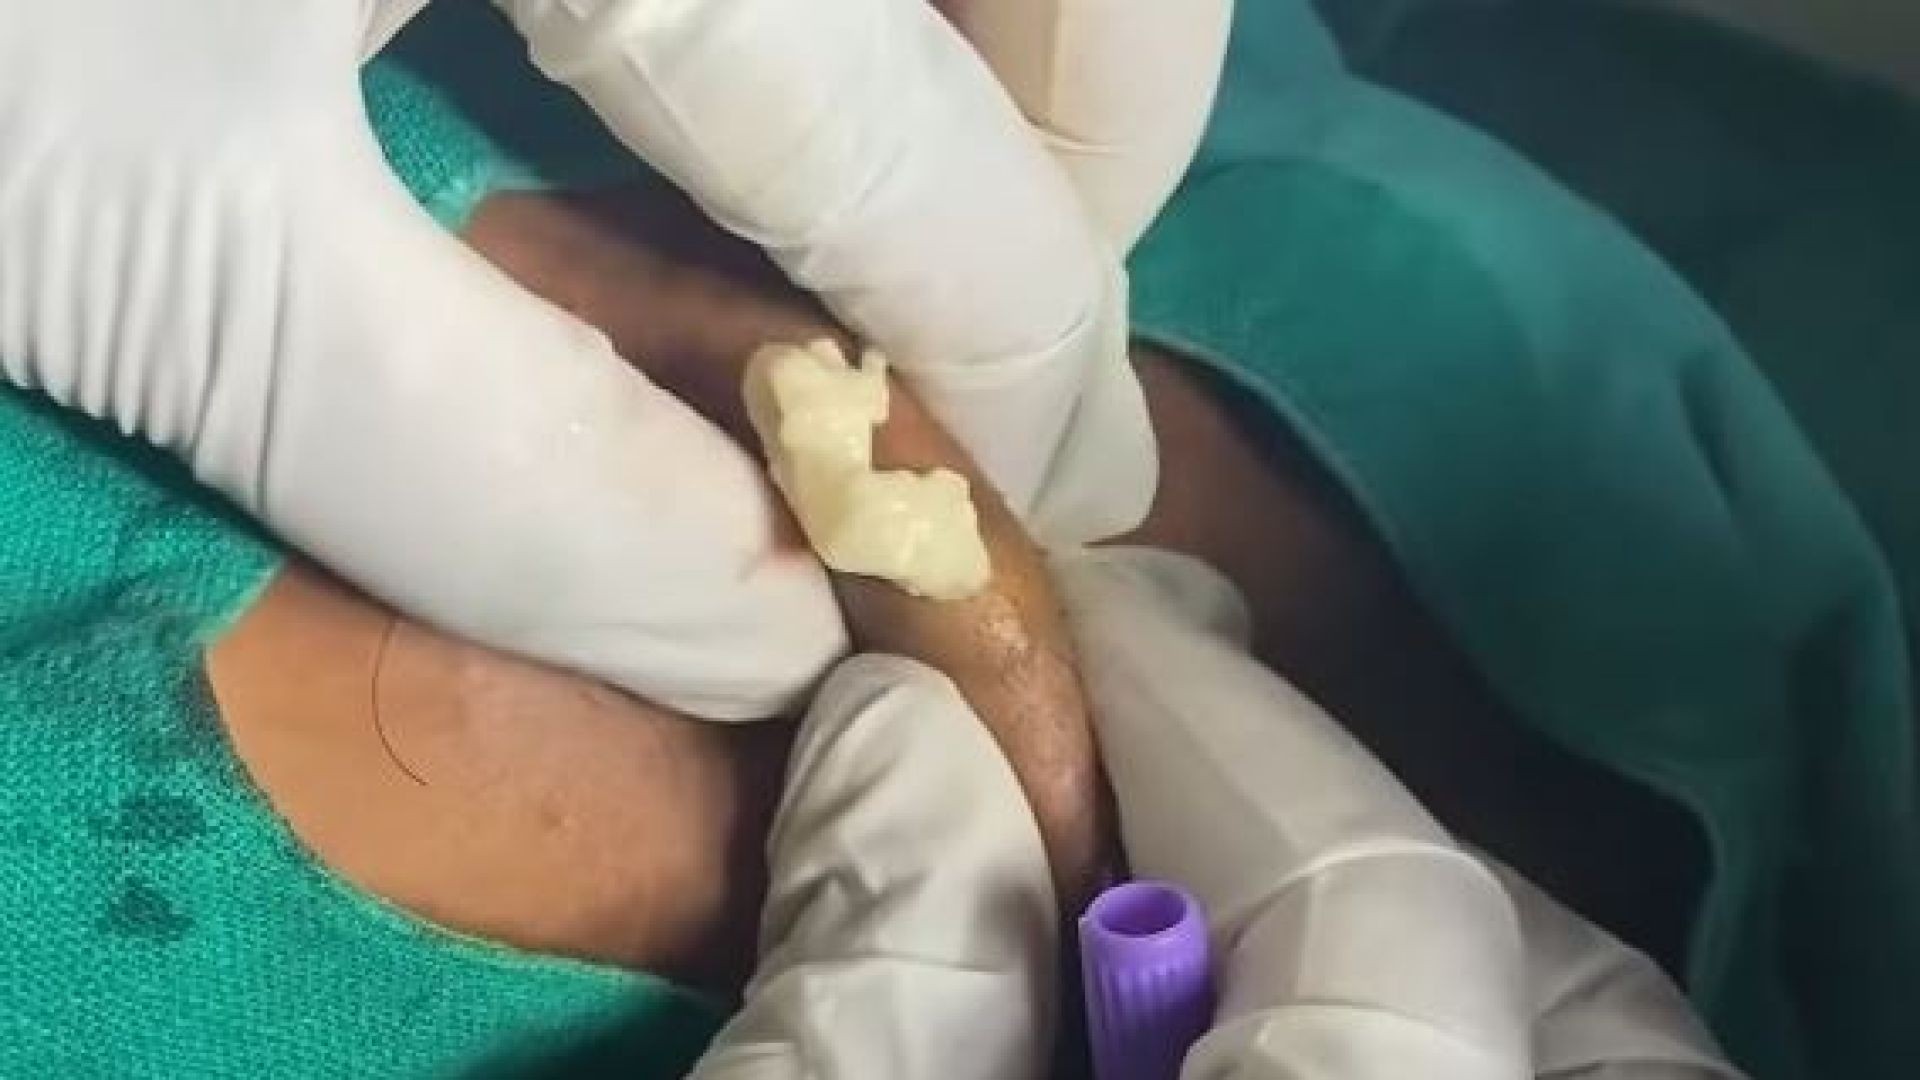 Sebaceous cyst excision using punch technique with out incision dermatosurgeon technique ♥️t